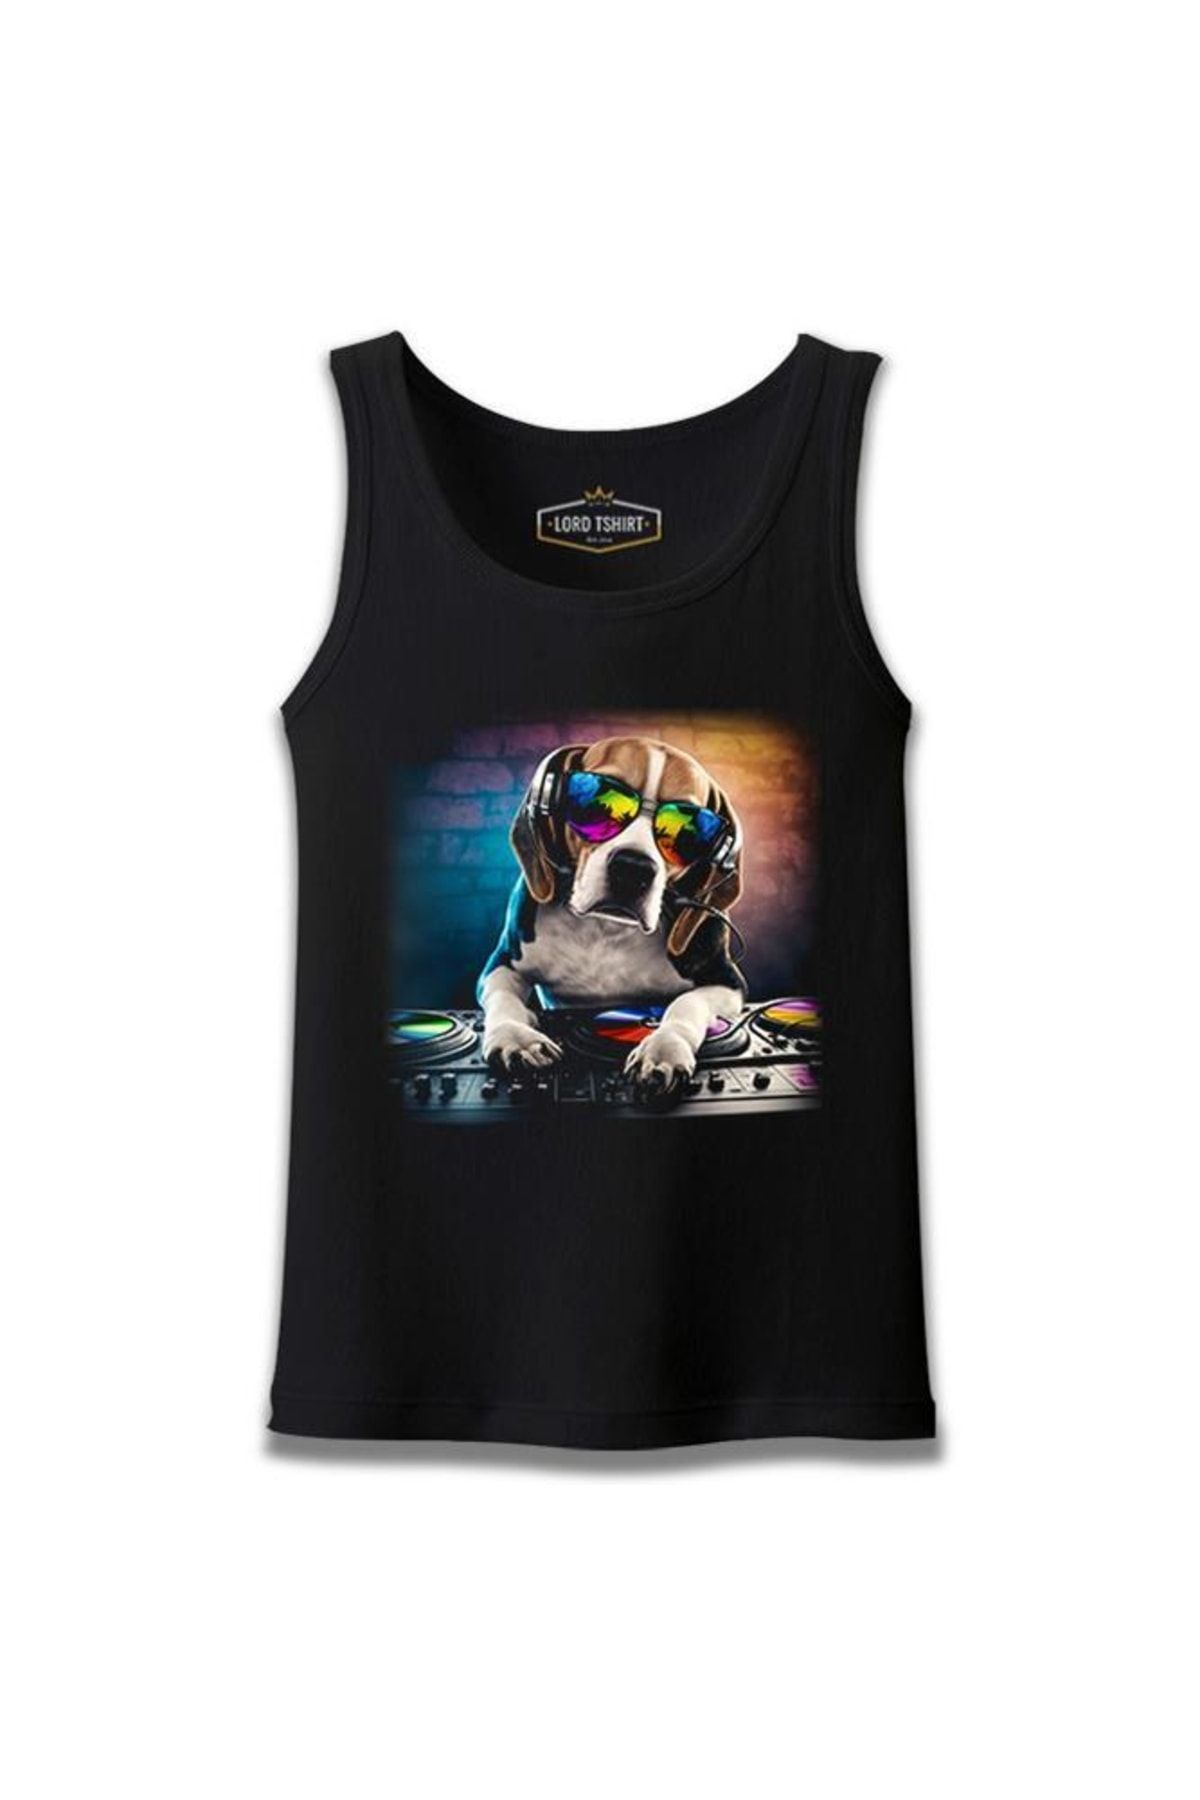 Lord T-Shirt Dj Dog With Headphone Playing The Board Siyah Erkek Atlet